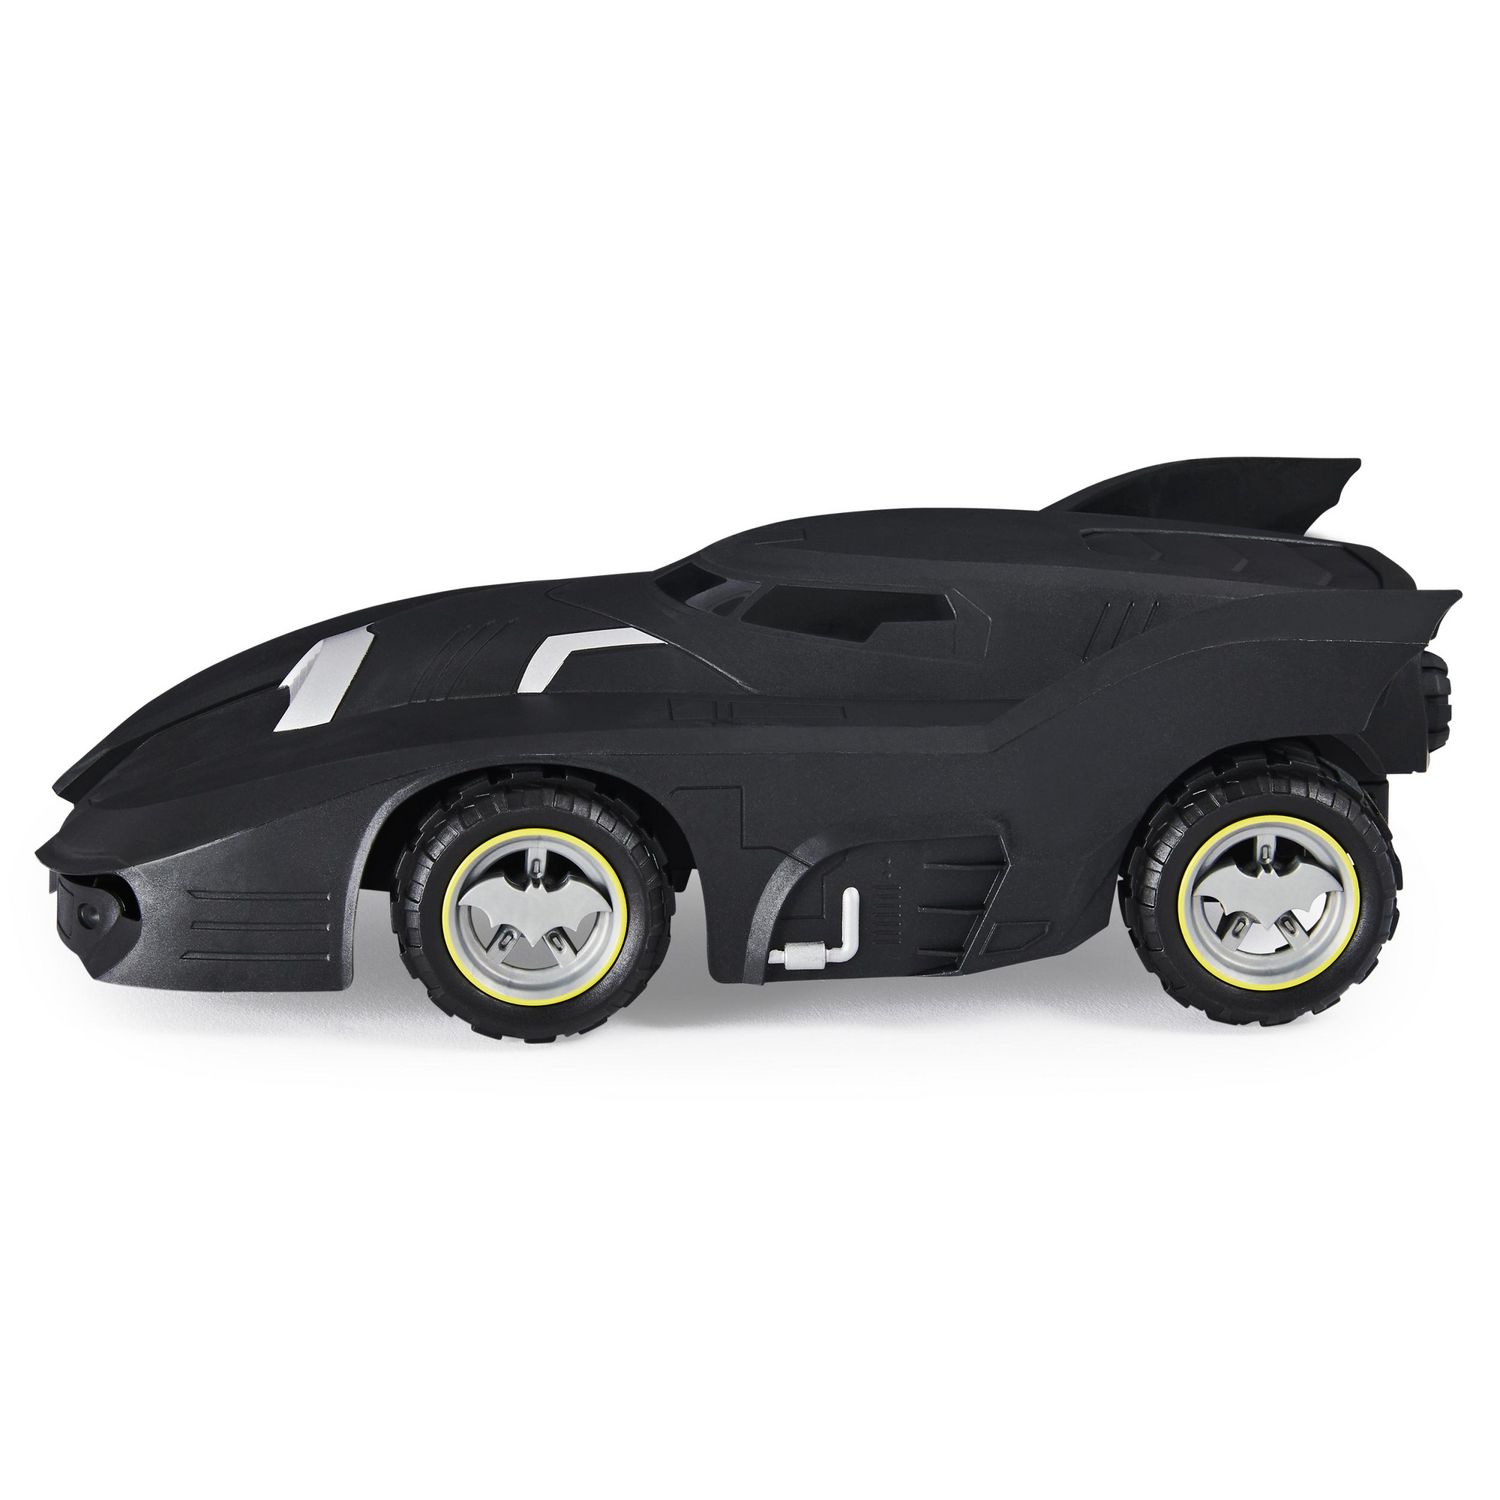 BATMAN Batmobile Remote Control Vehicle 1:20 Scale, Kids Toys for